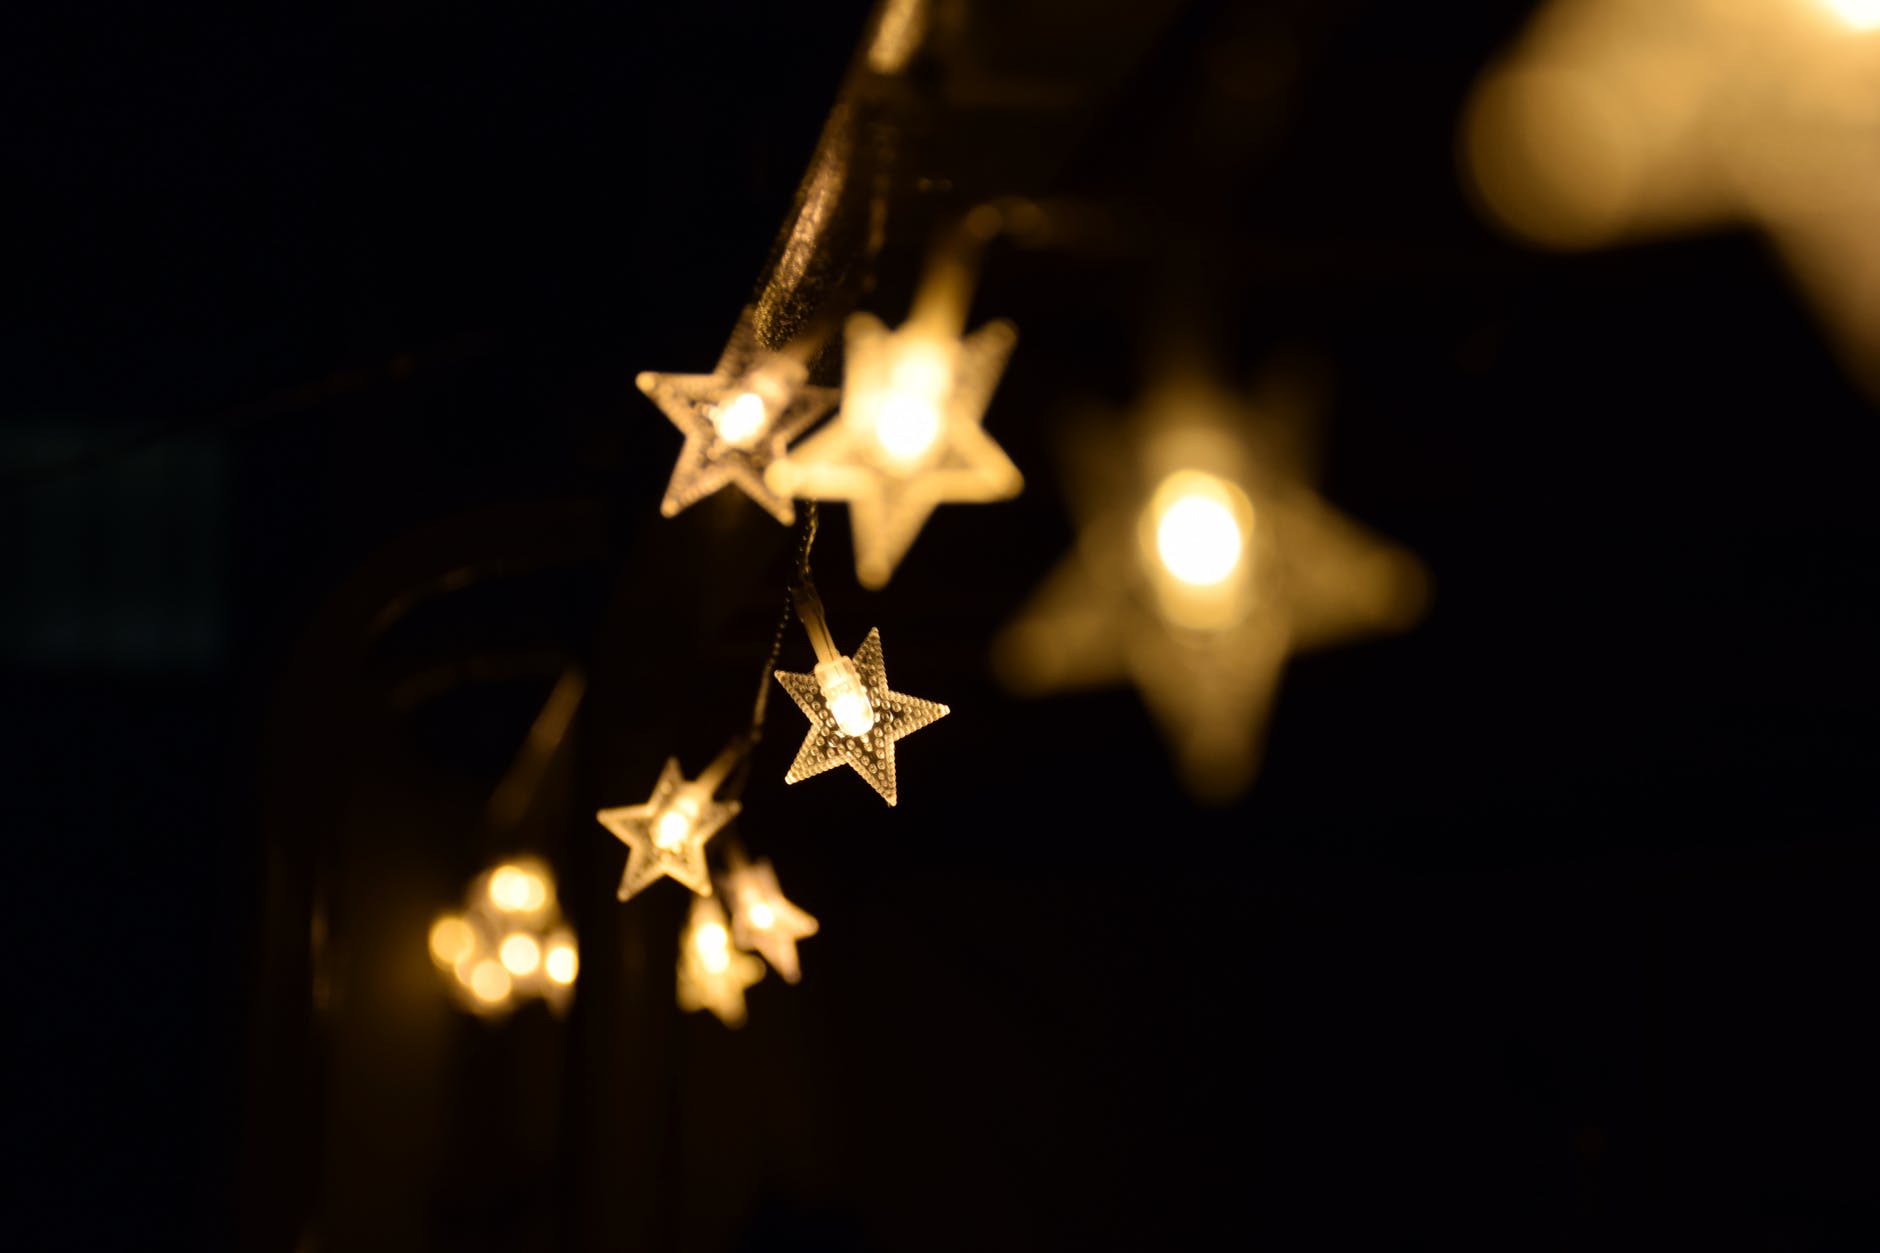 shallow focus photography of yellow star lanterns